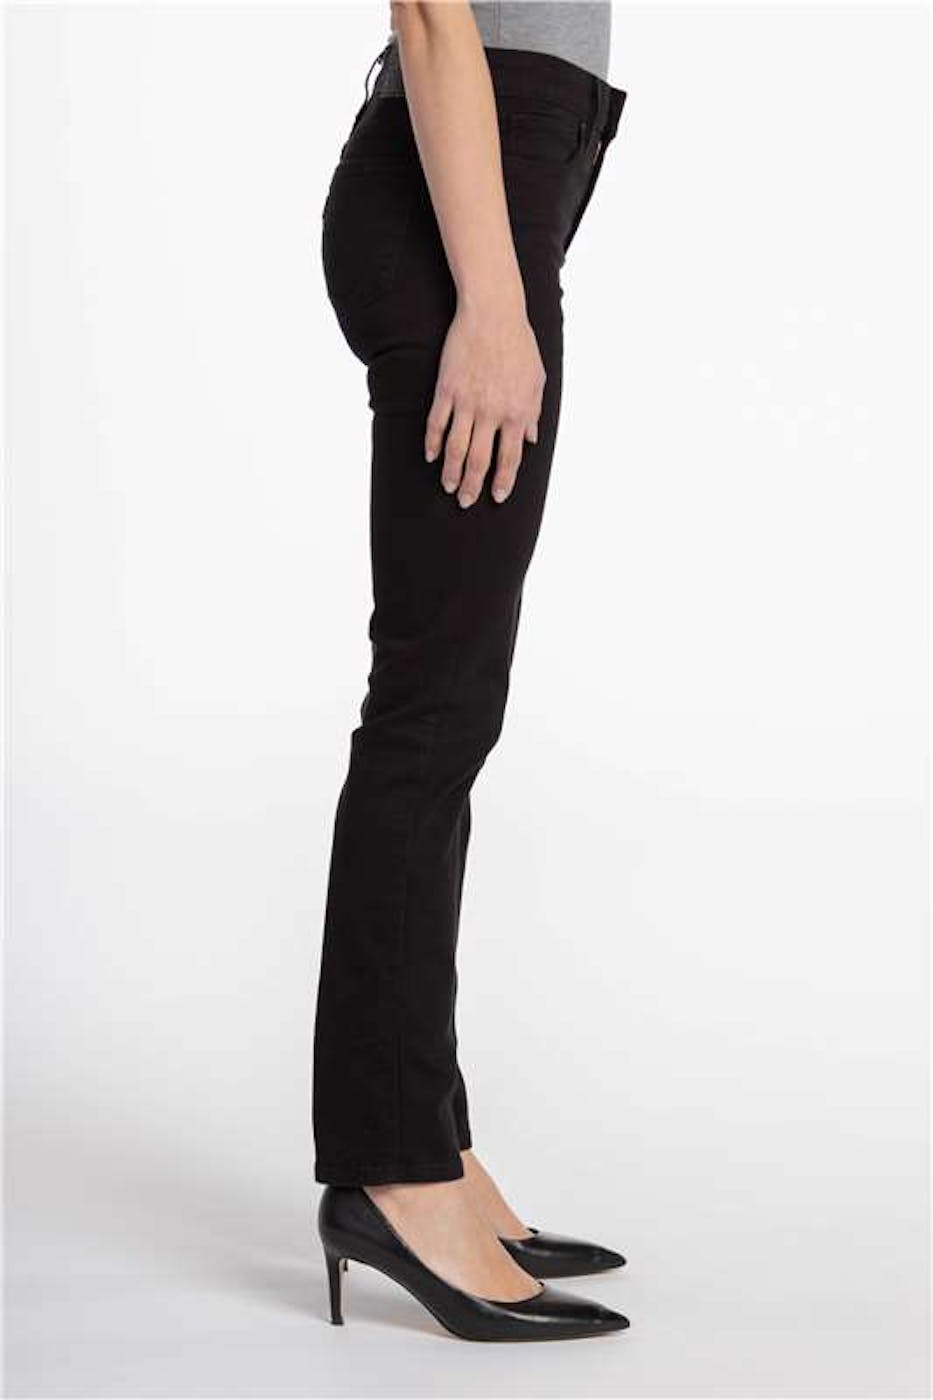 Levi's - Zwarte 712 slim jeans